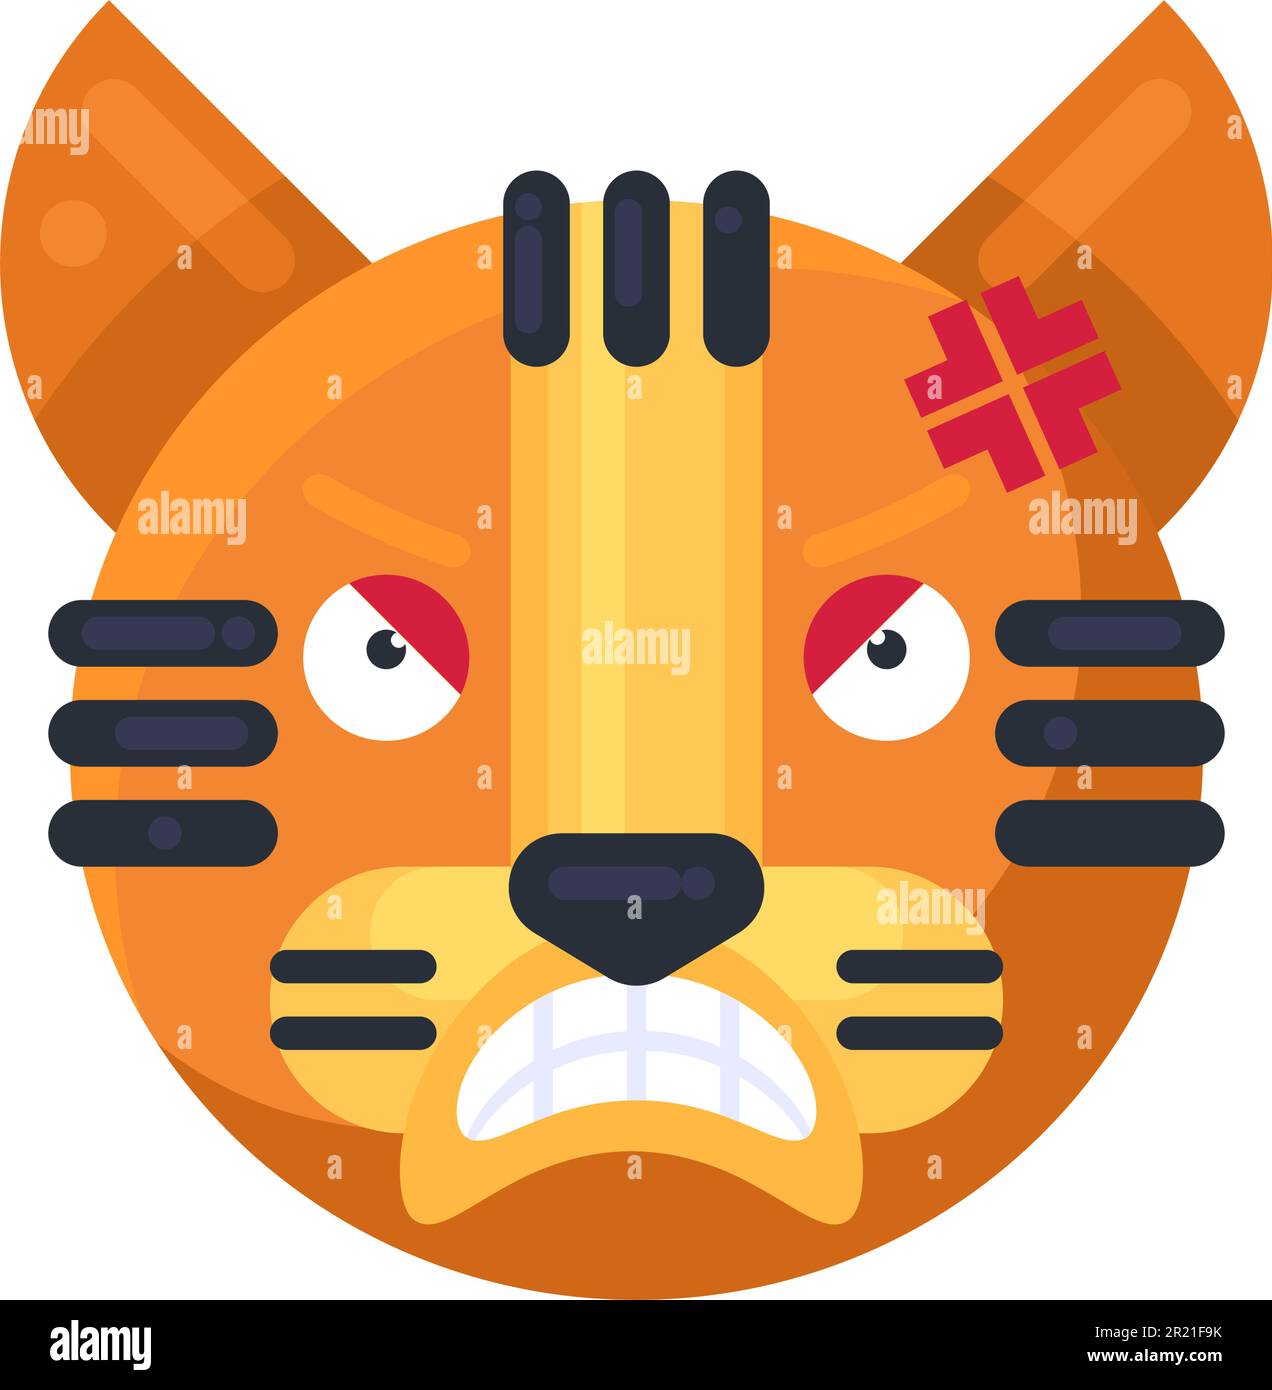 Tiger angry reaction expresion facial emoji vector. Jungle cat